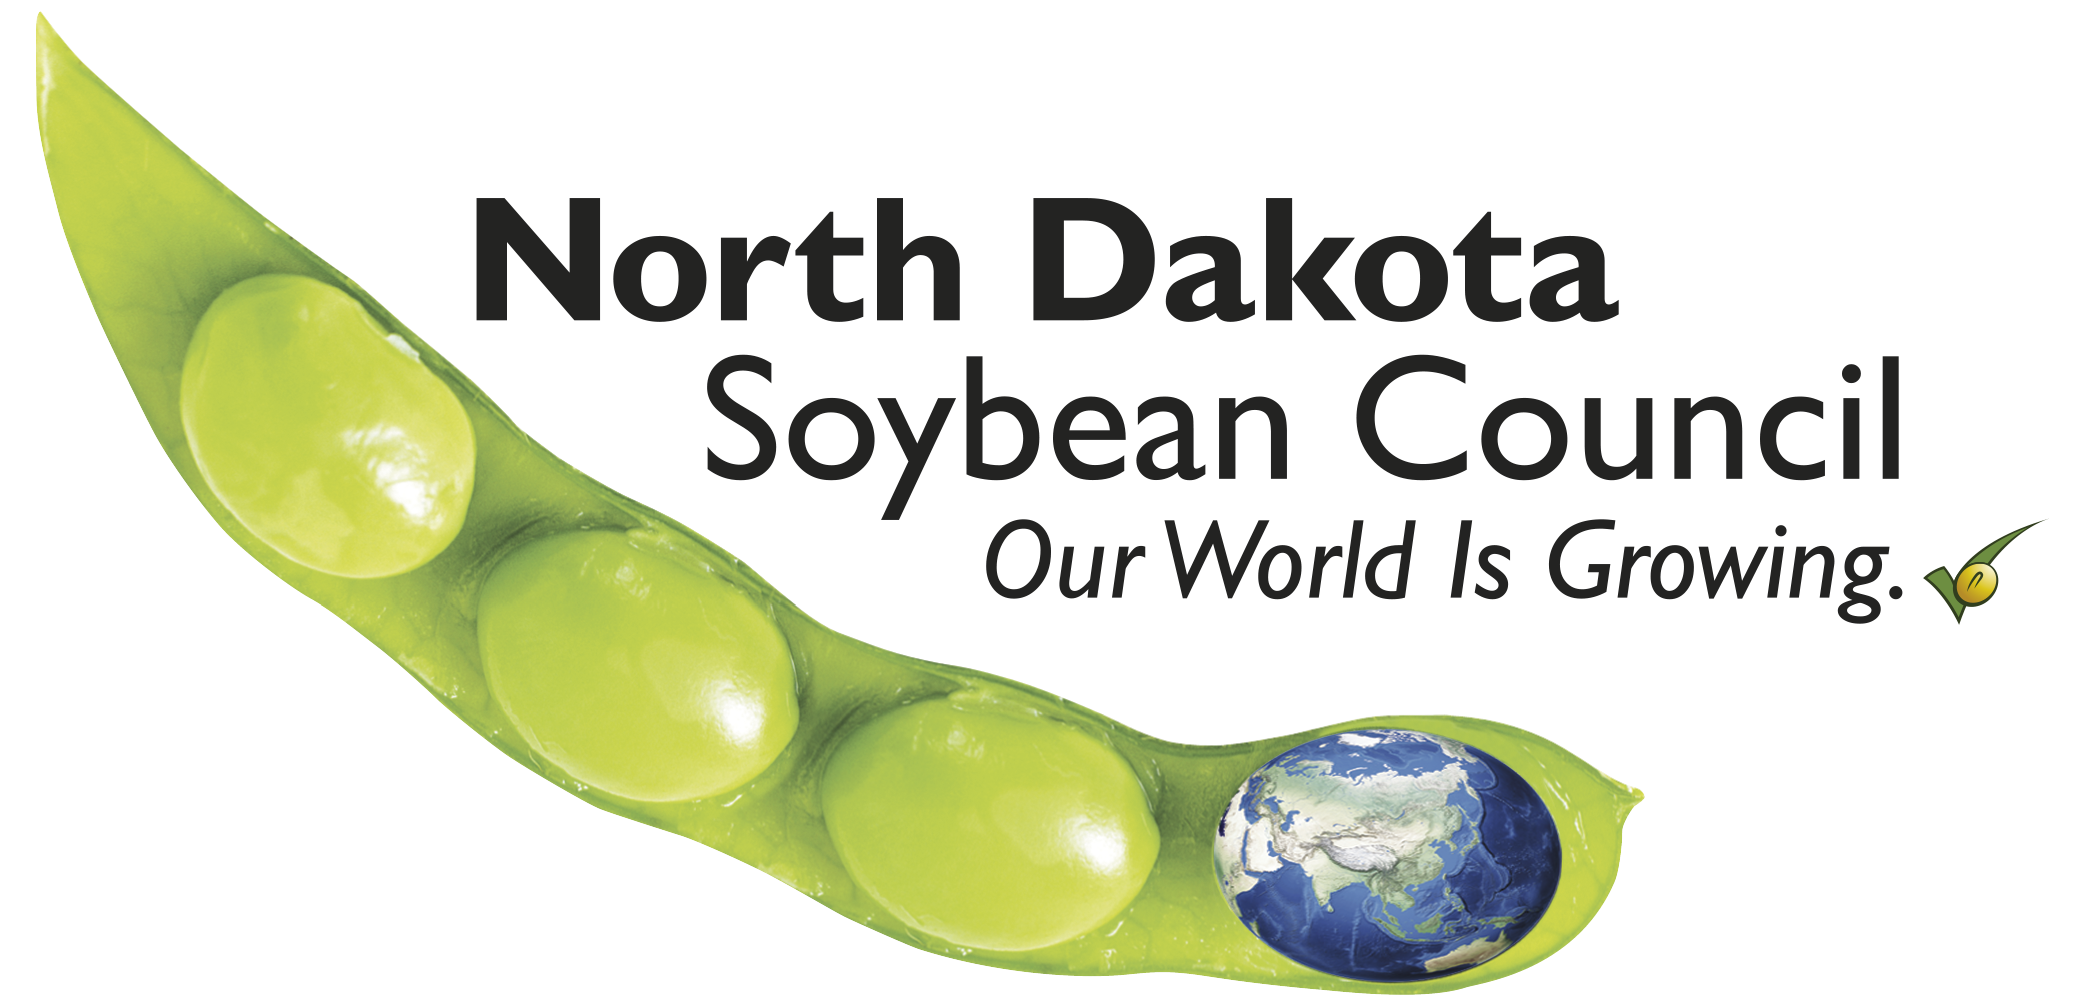 ND Soybean Council logo